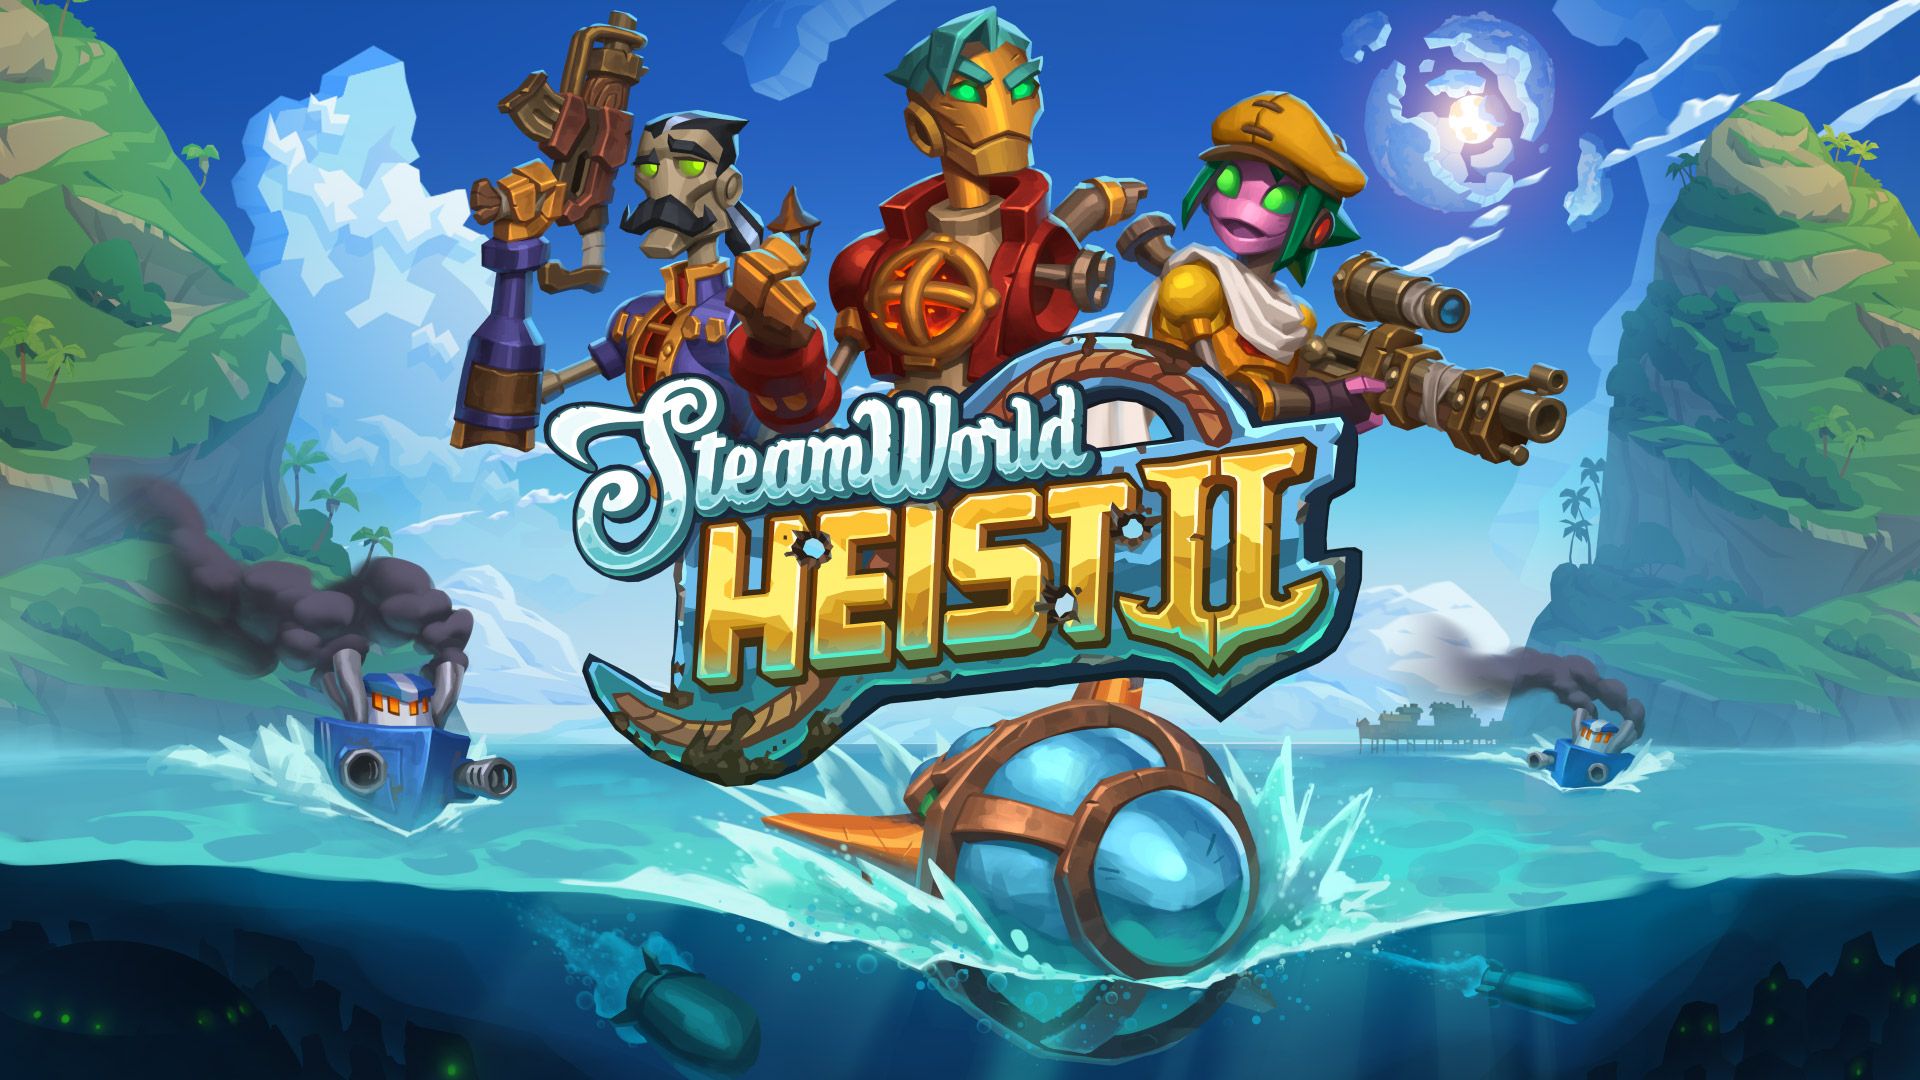 SteamWorld Heist II hands-on preview